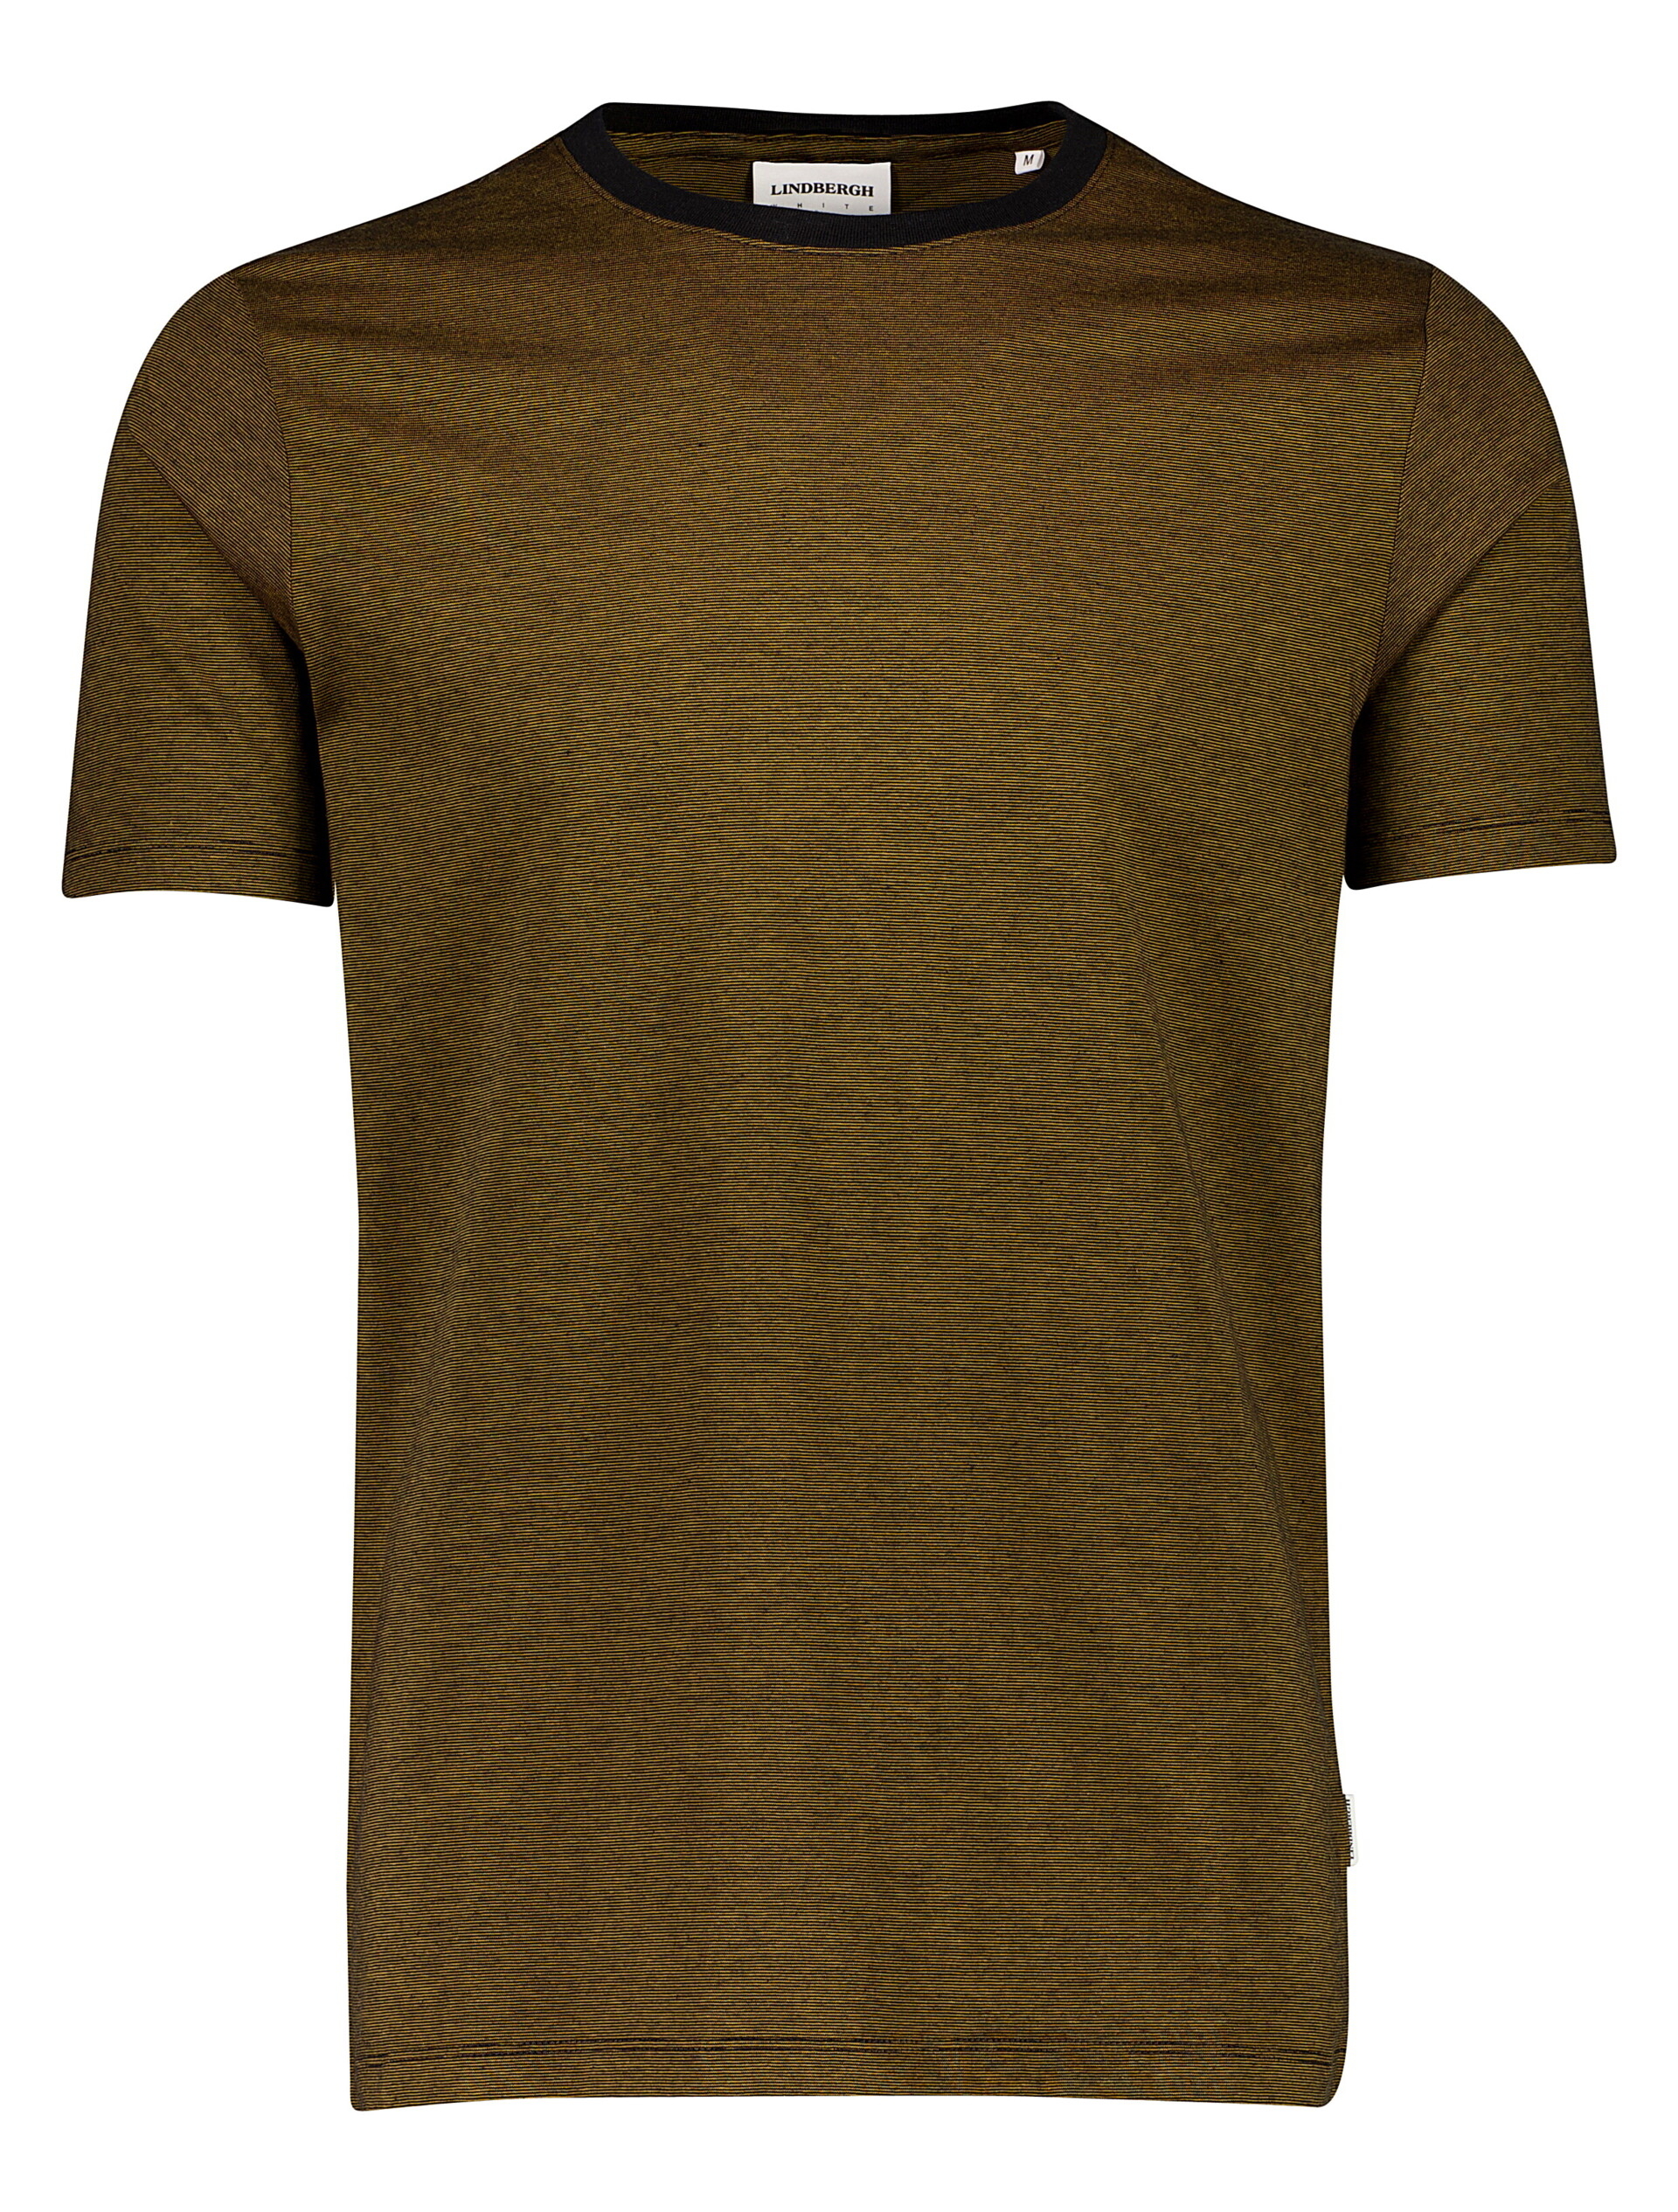 Lindbergh T-shirt bruin / mid brown